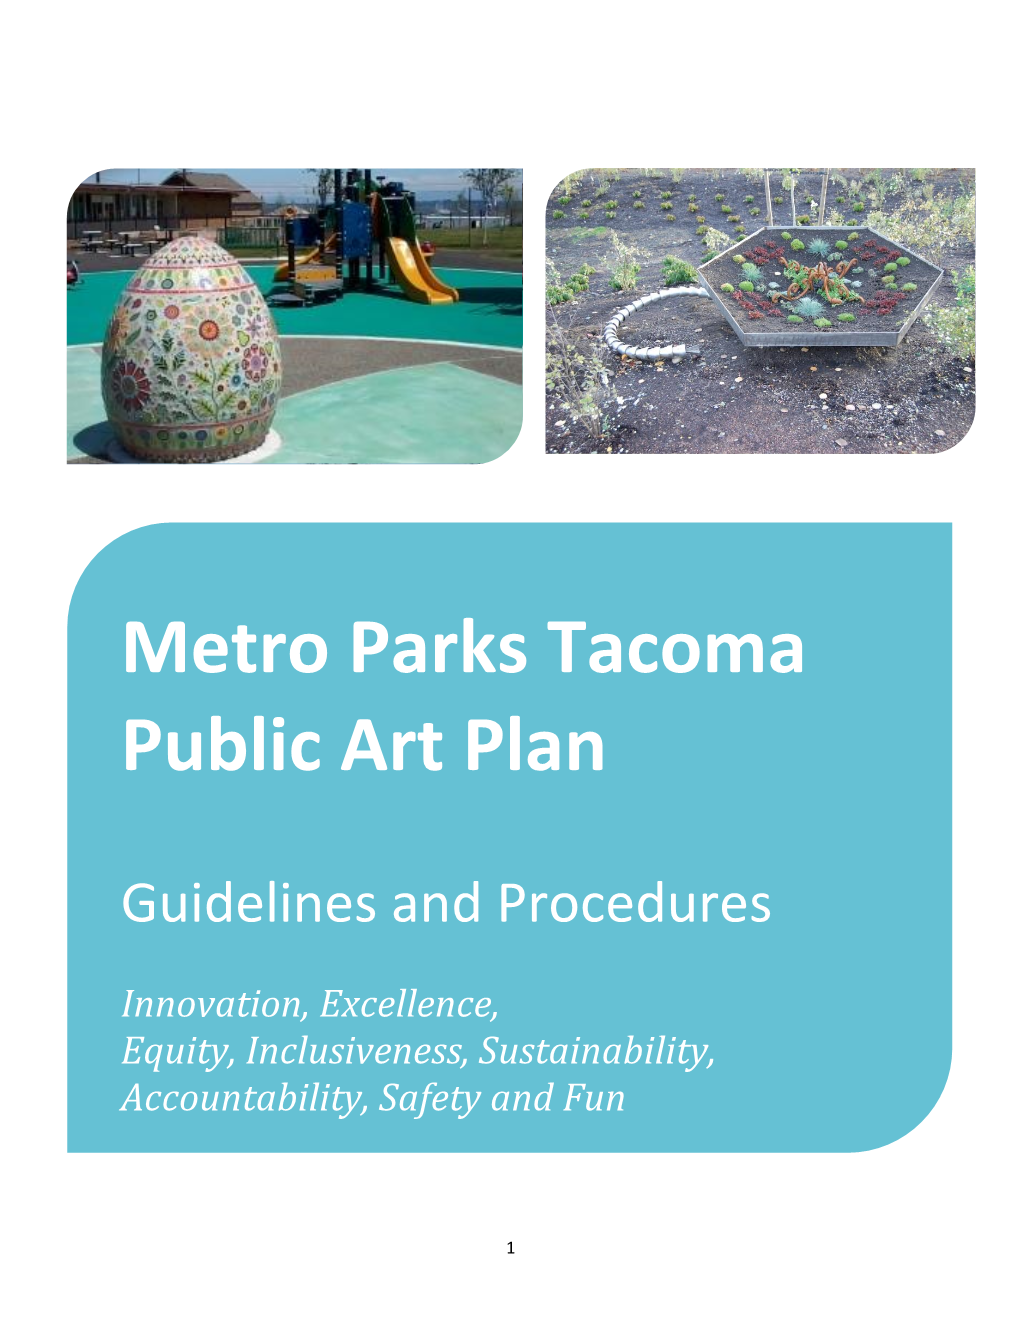 Metro Parks Tacoma Public Art Plan